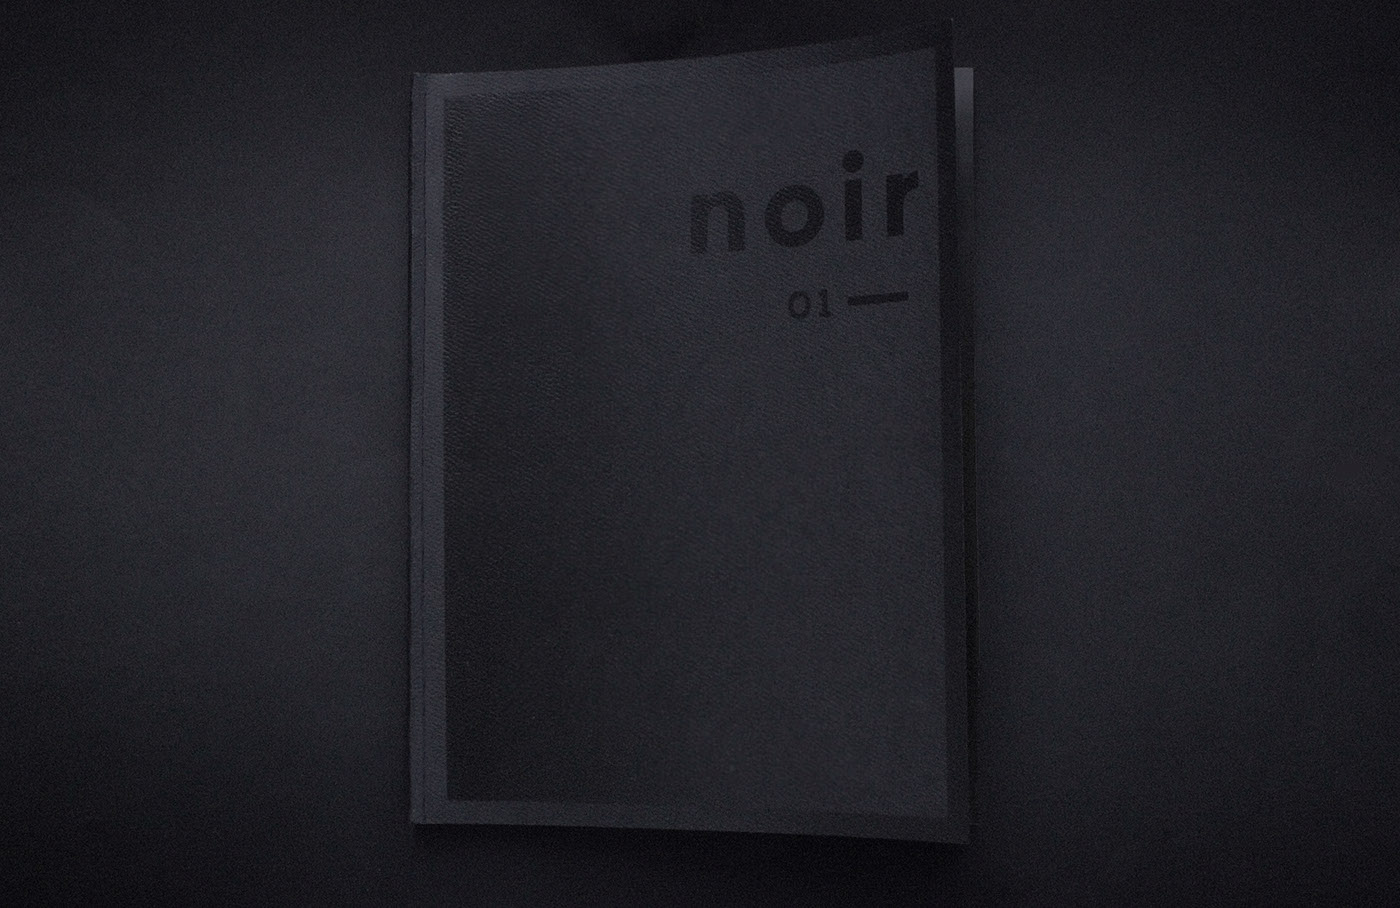 noir magazine edition black and white gradient